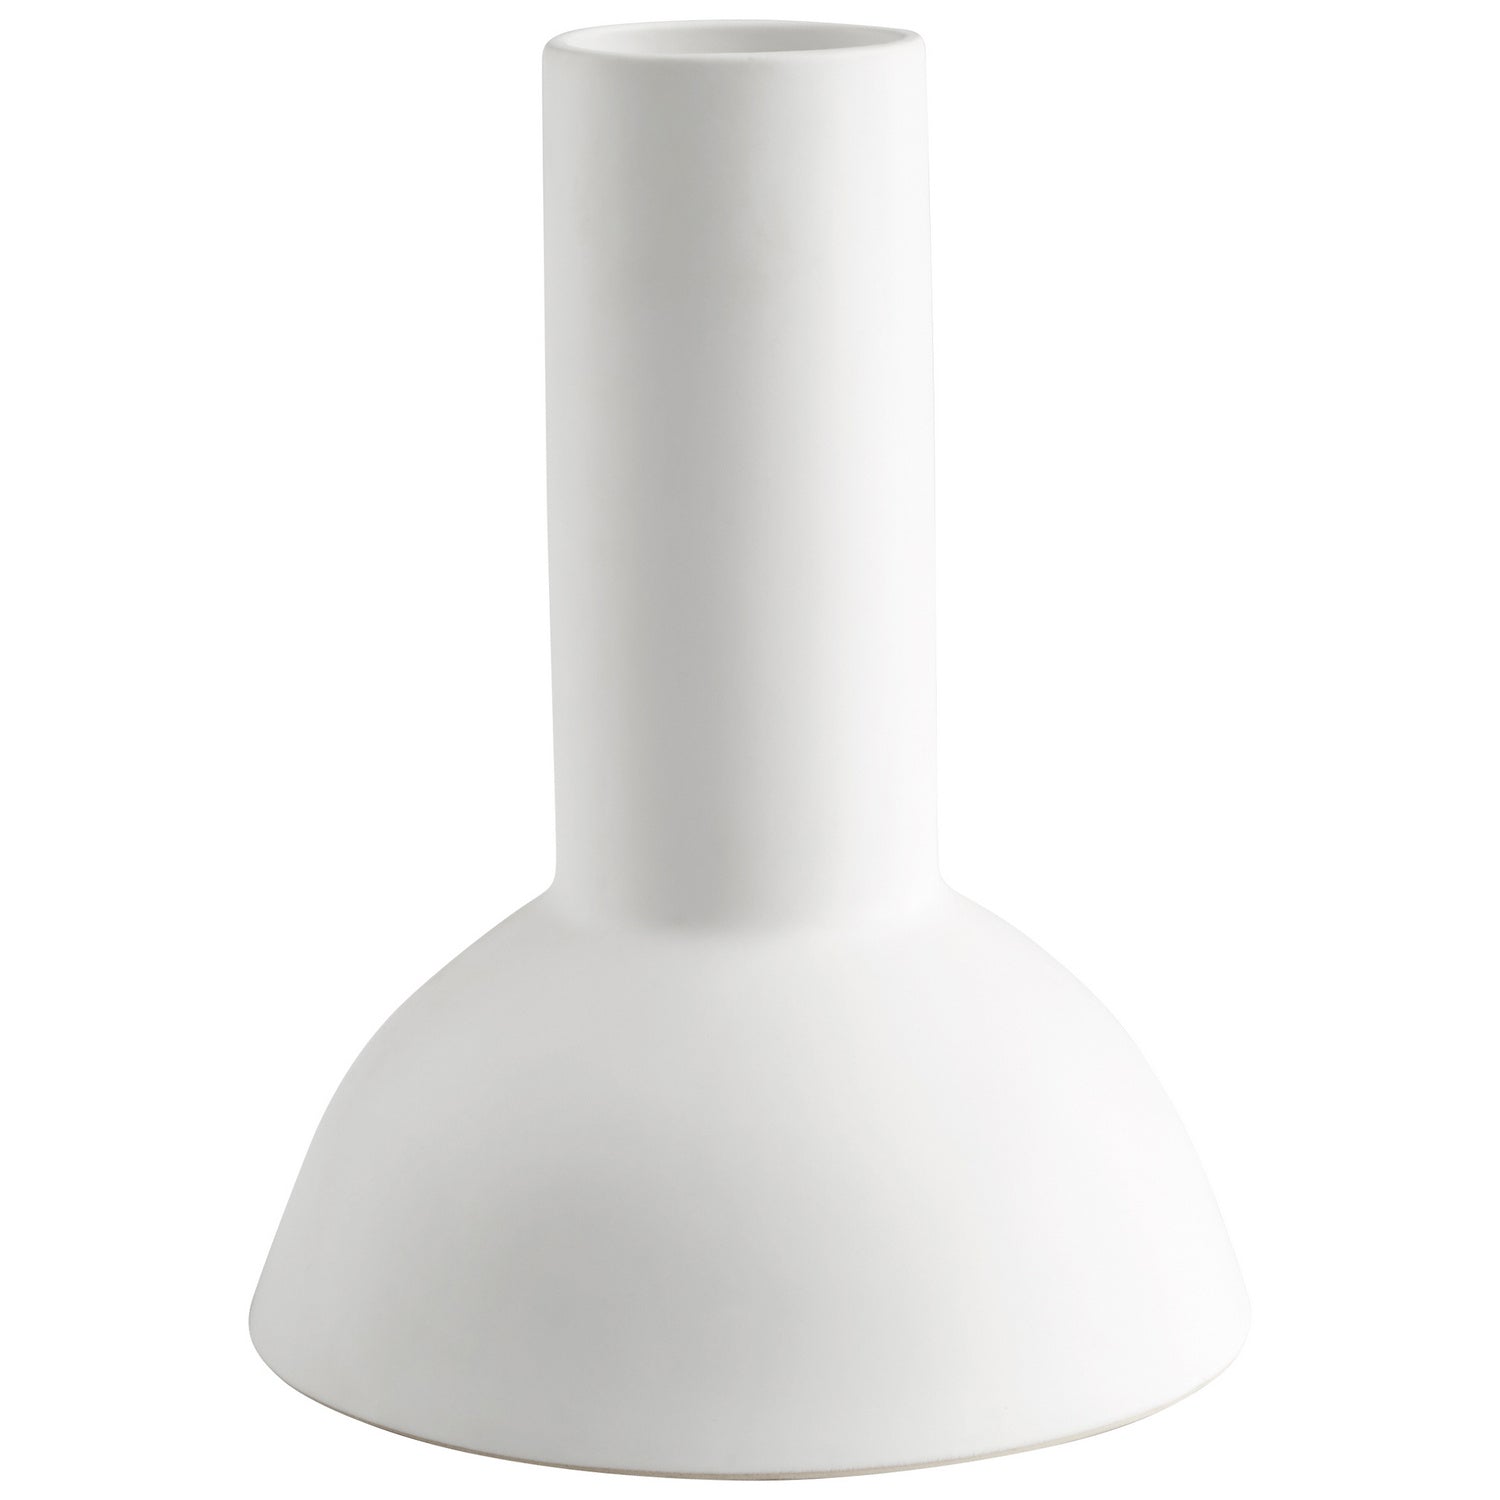 Cyan 10827 Vases & Planters - White